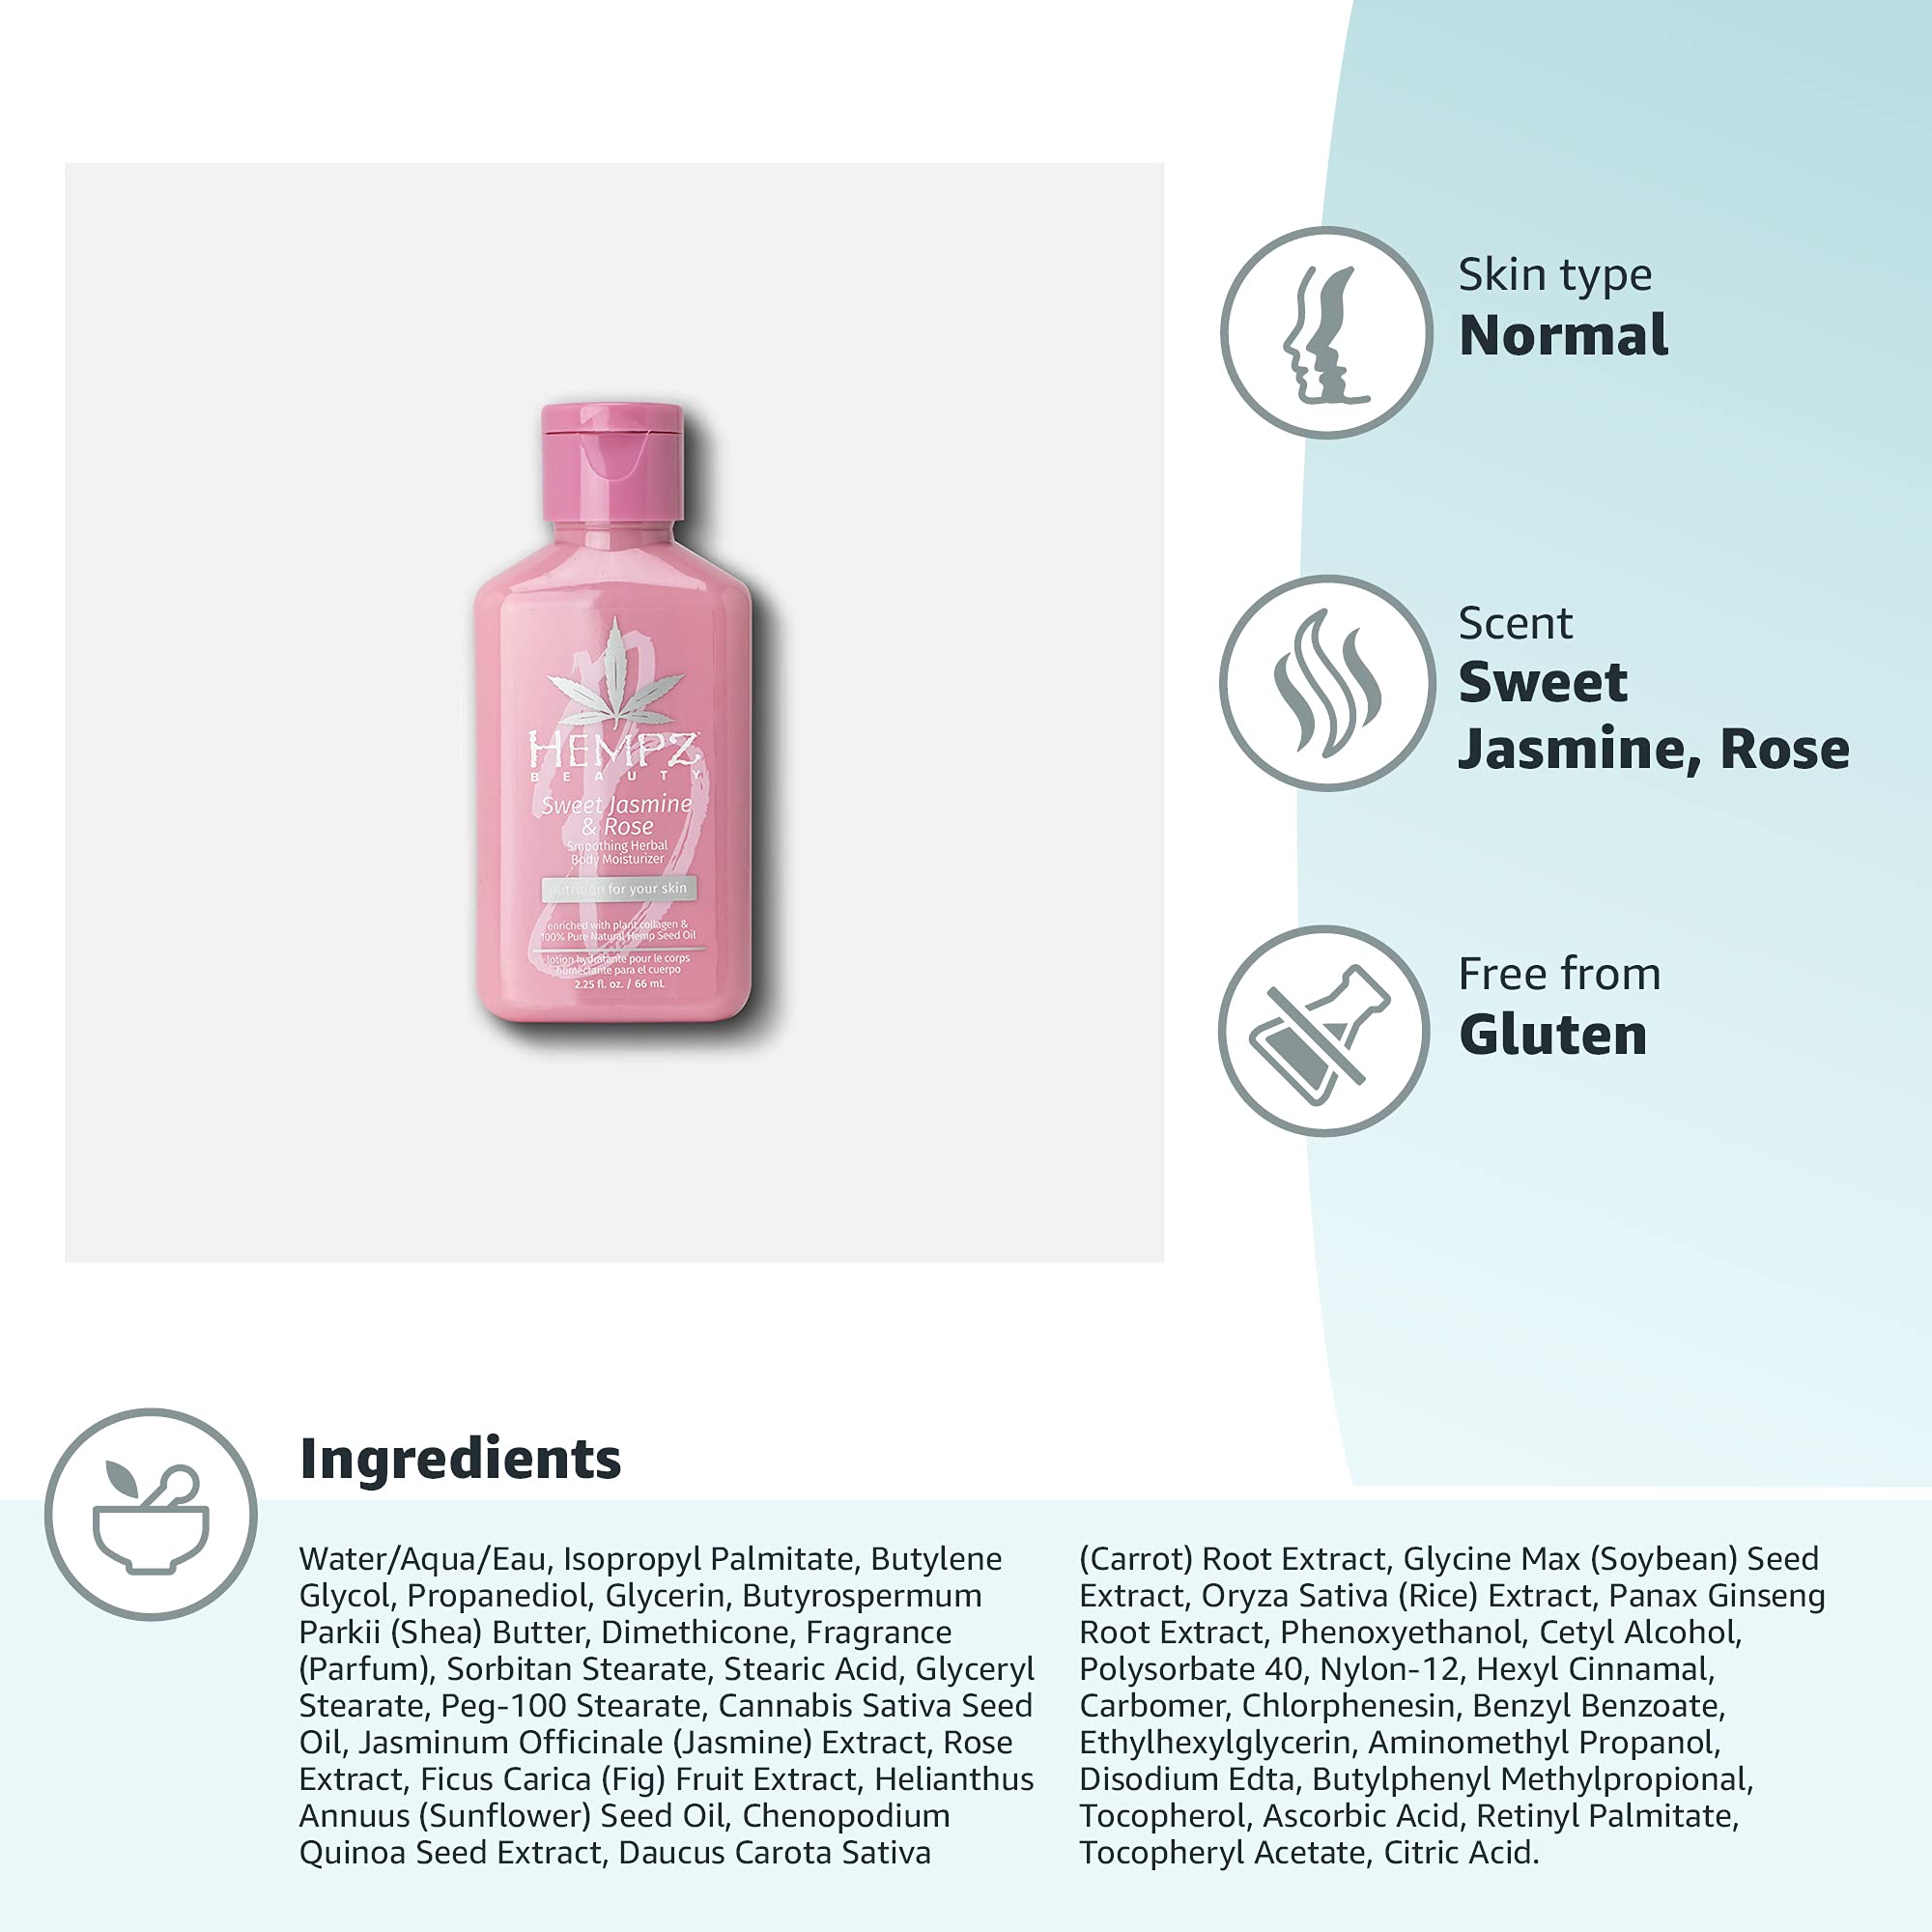 Hempz Mini Collagen-Infused Jasmine & Rose Body Moisturizer, 1 oz - Paraben-Free, Vegan, Cruelty-Free